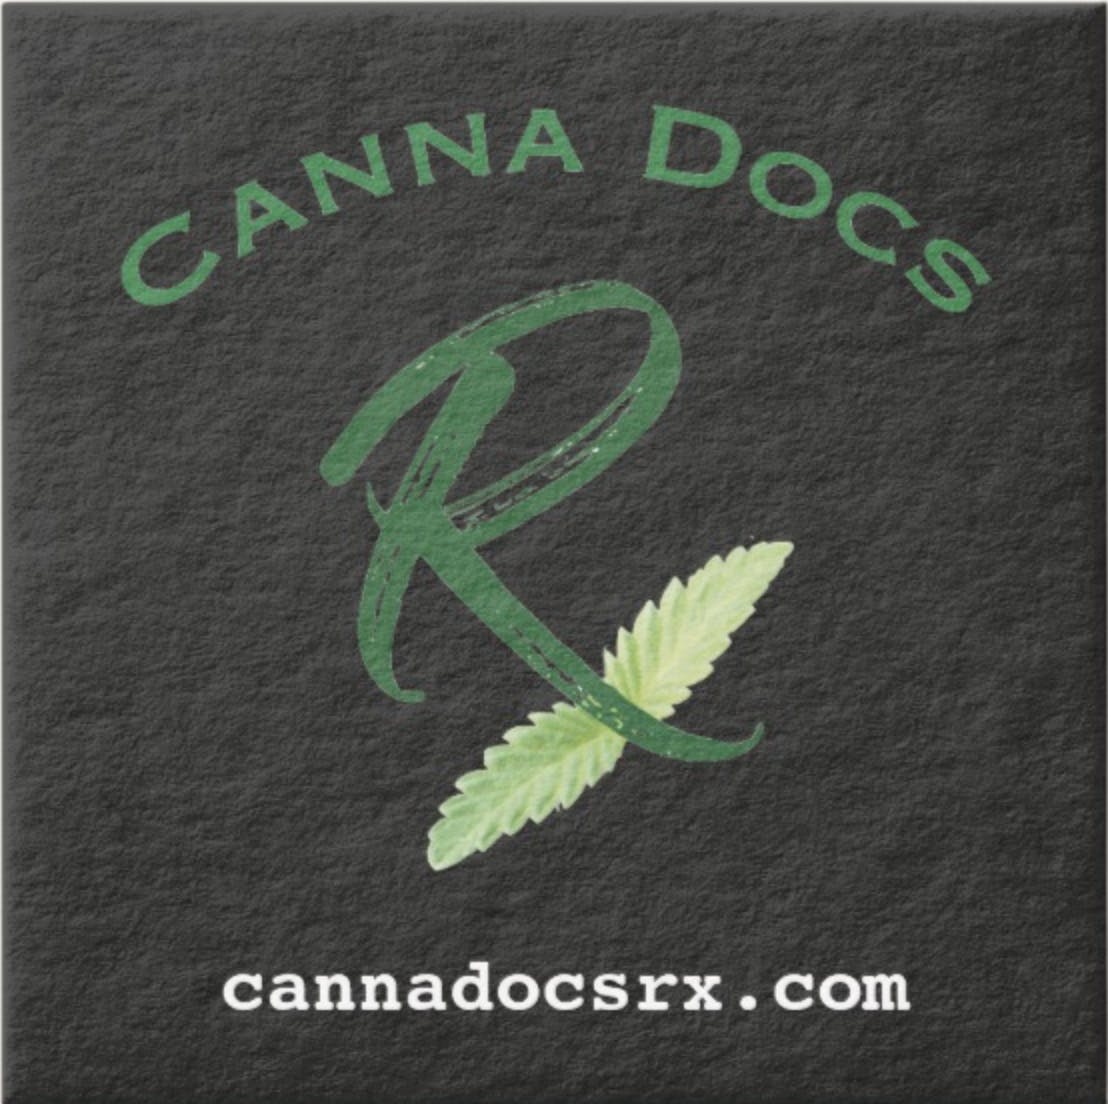 Canna Docs Rx | Store